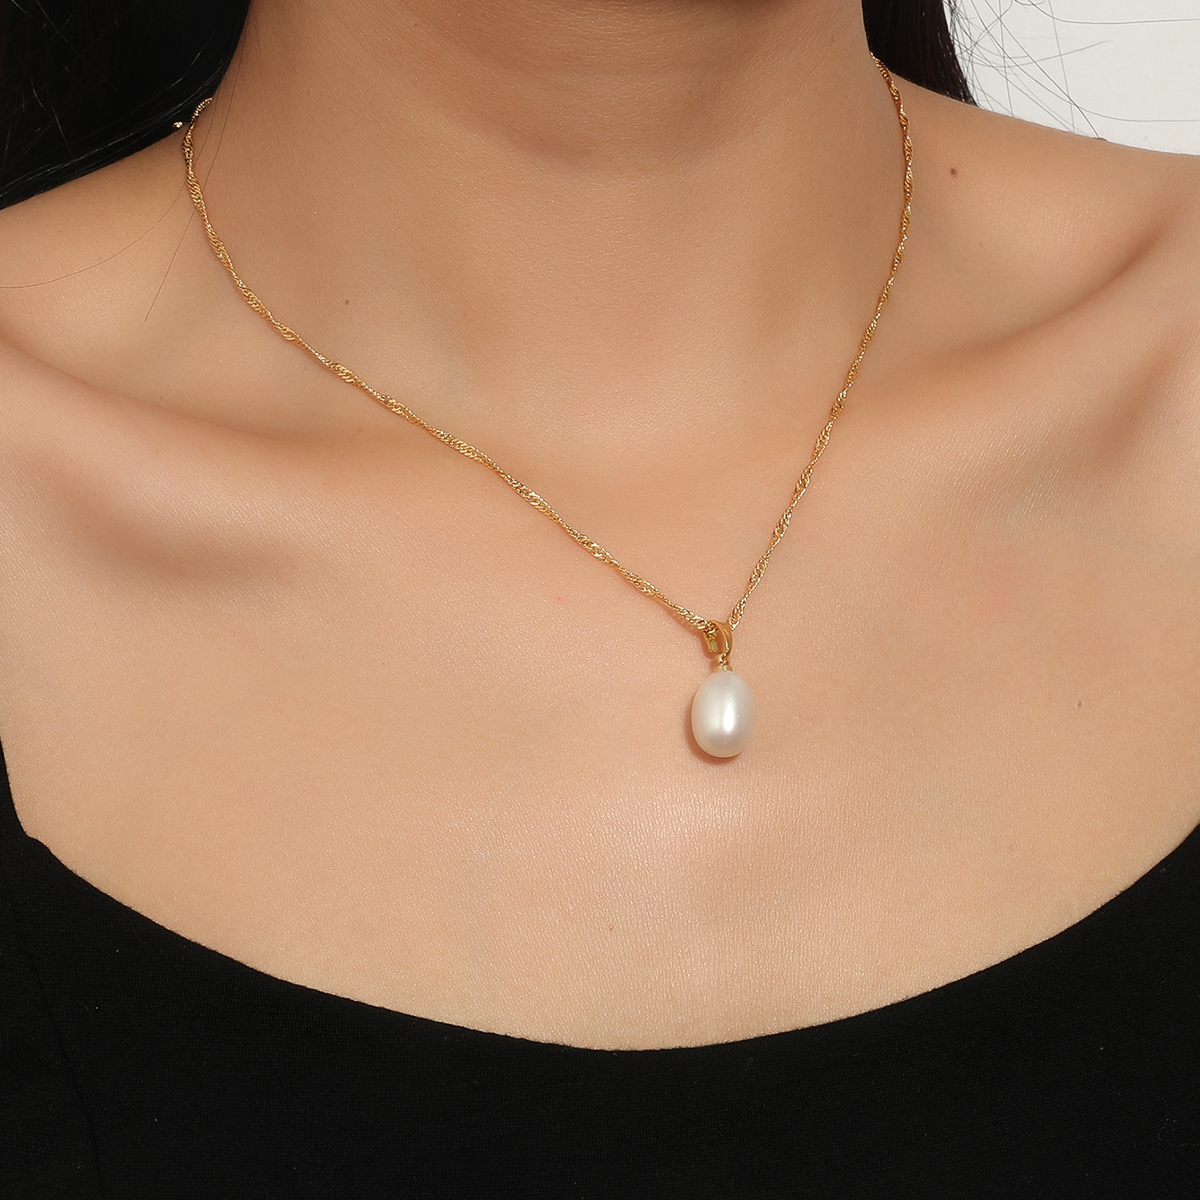 10pc Stunning Gold Pearl Pendant Necklace UK seller| GCJ222